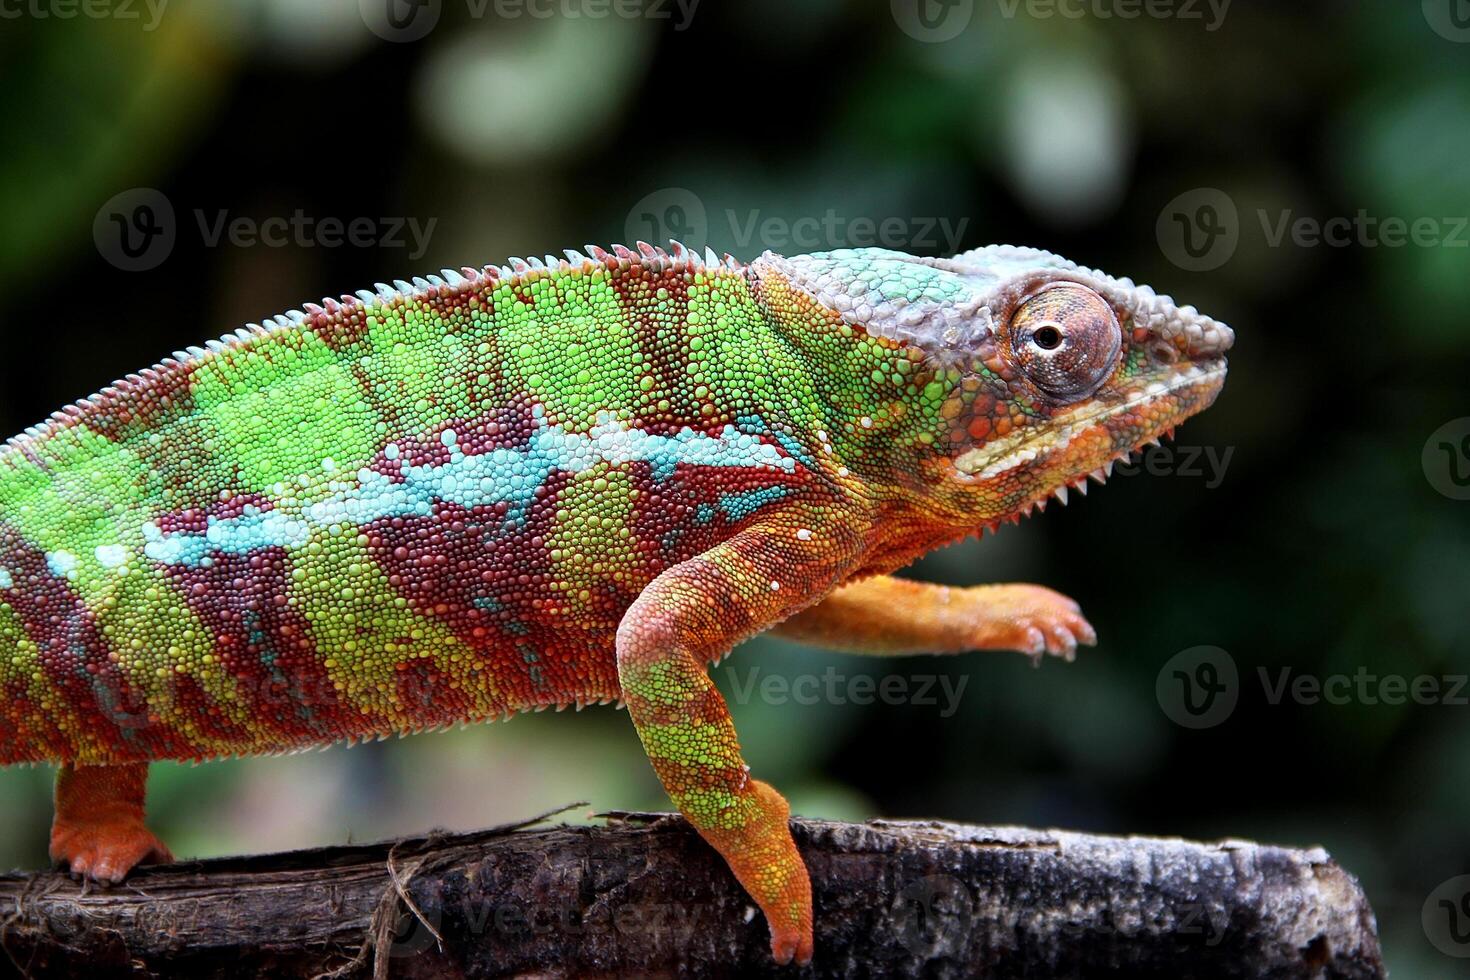 bellissimo creatura ambilobe pantera camaleonte foto